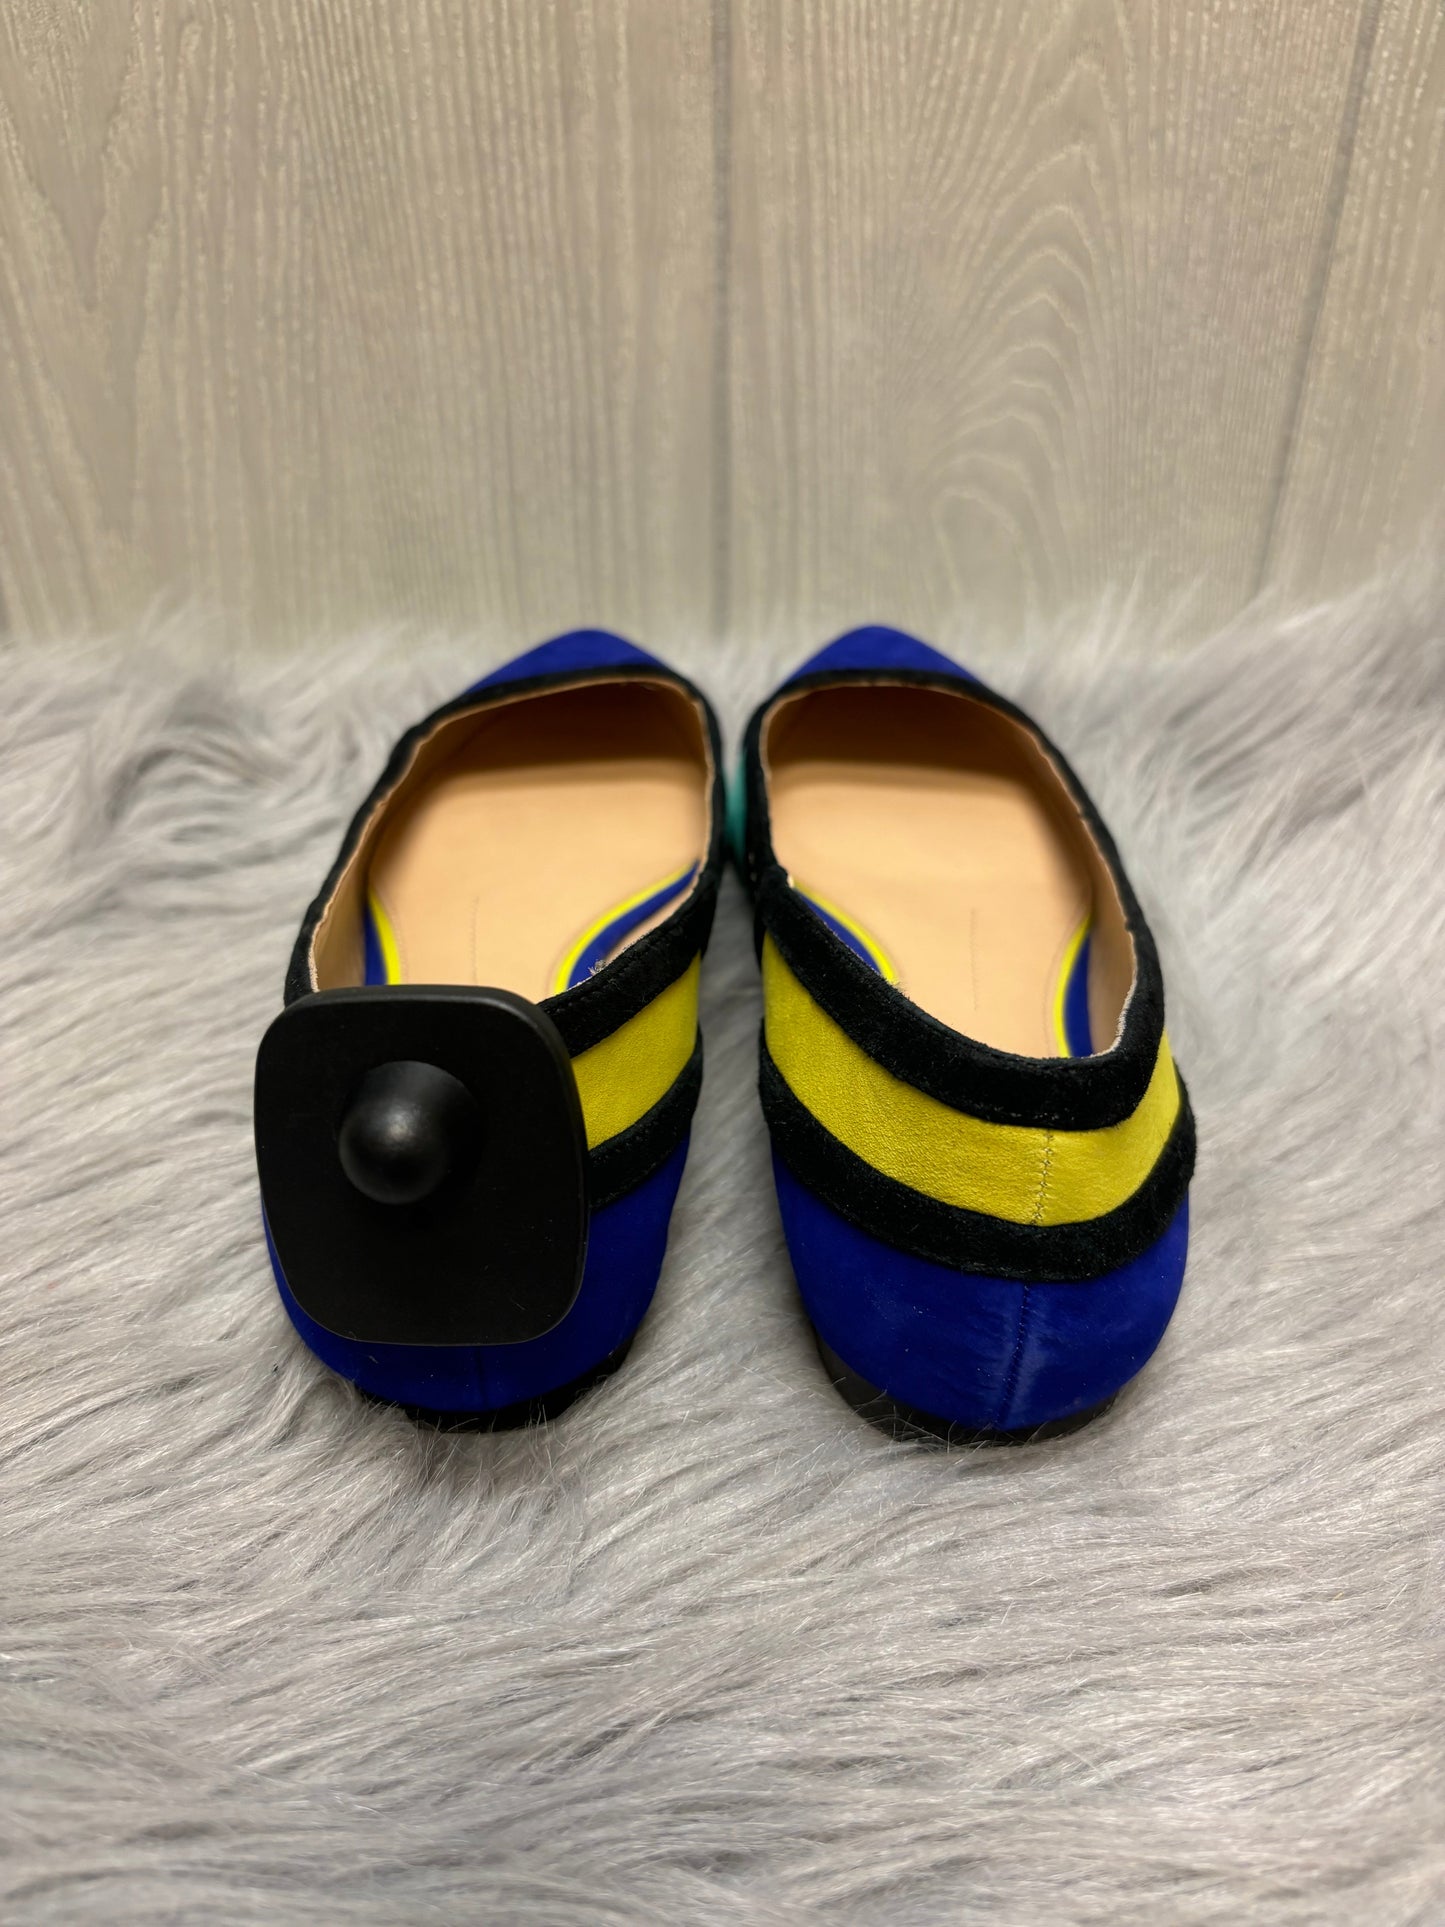 Multi-colored Shoes Flats Gianni Bini, Size 8.5